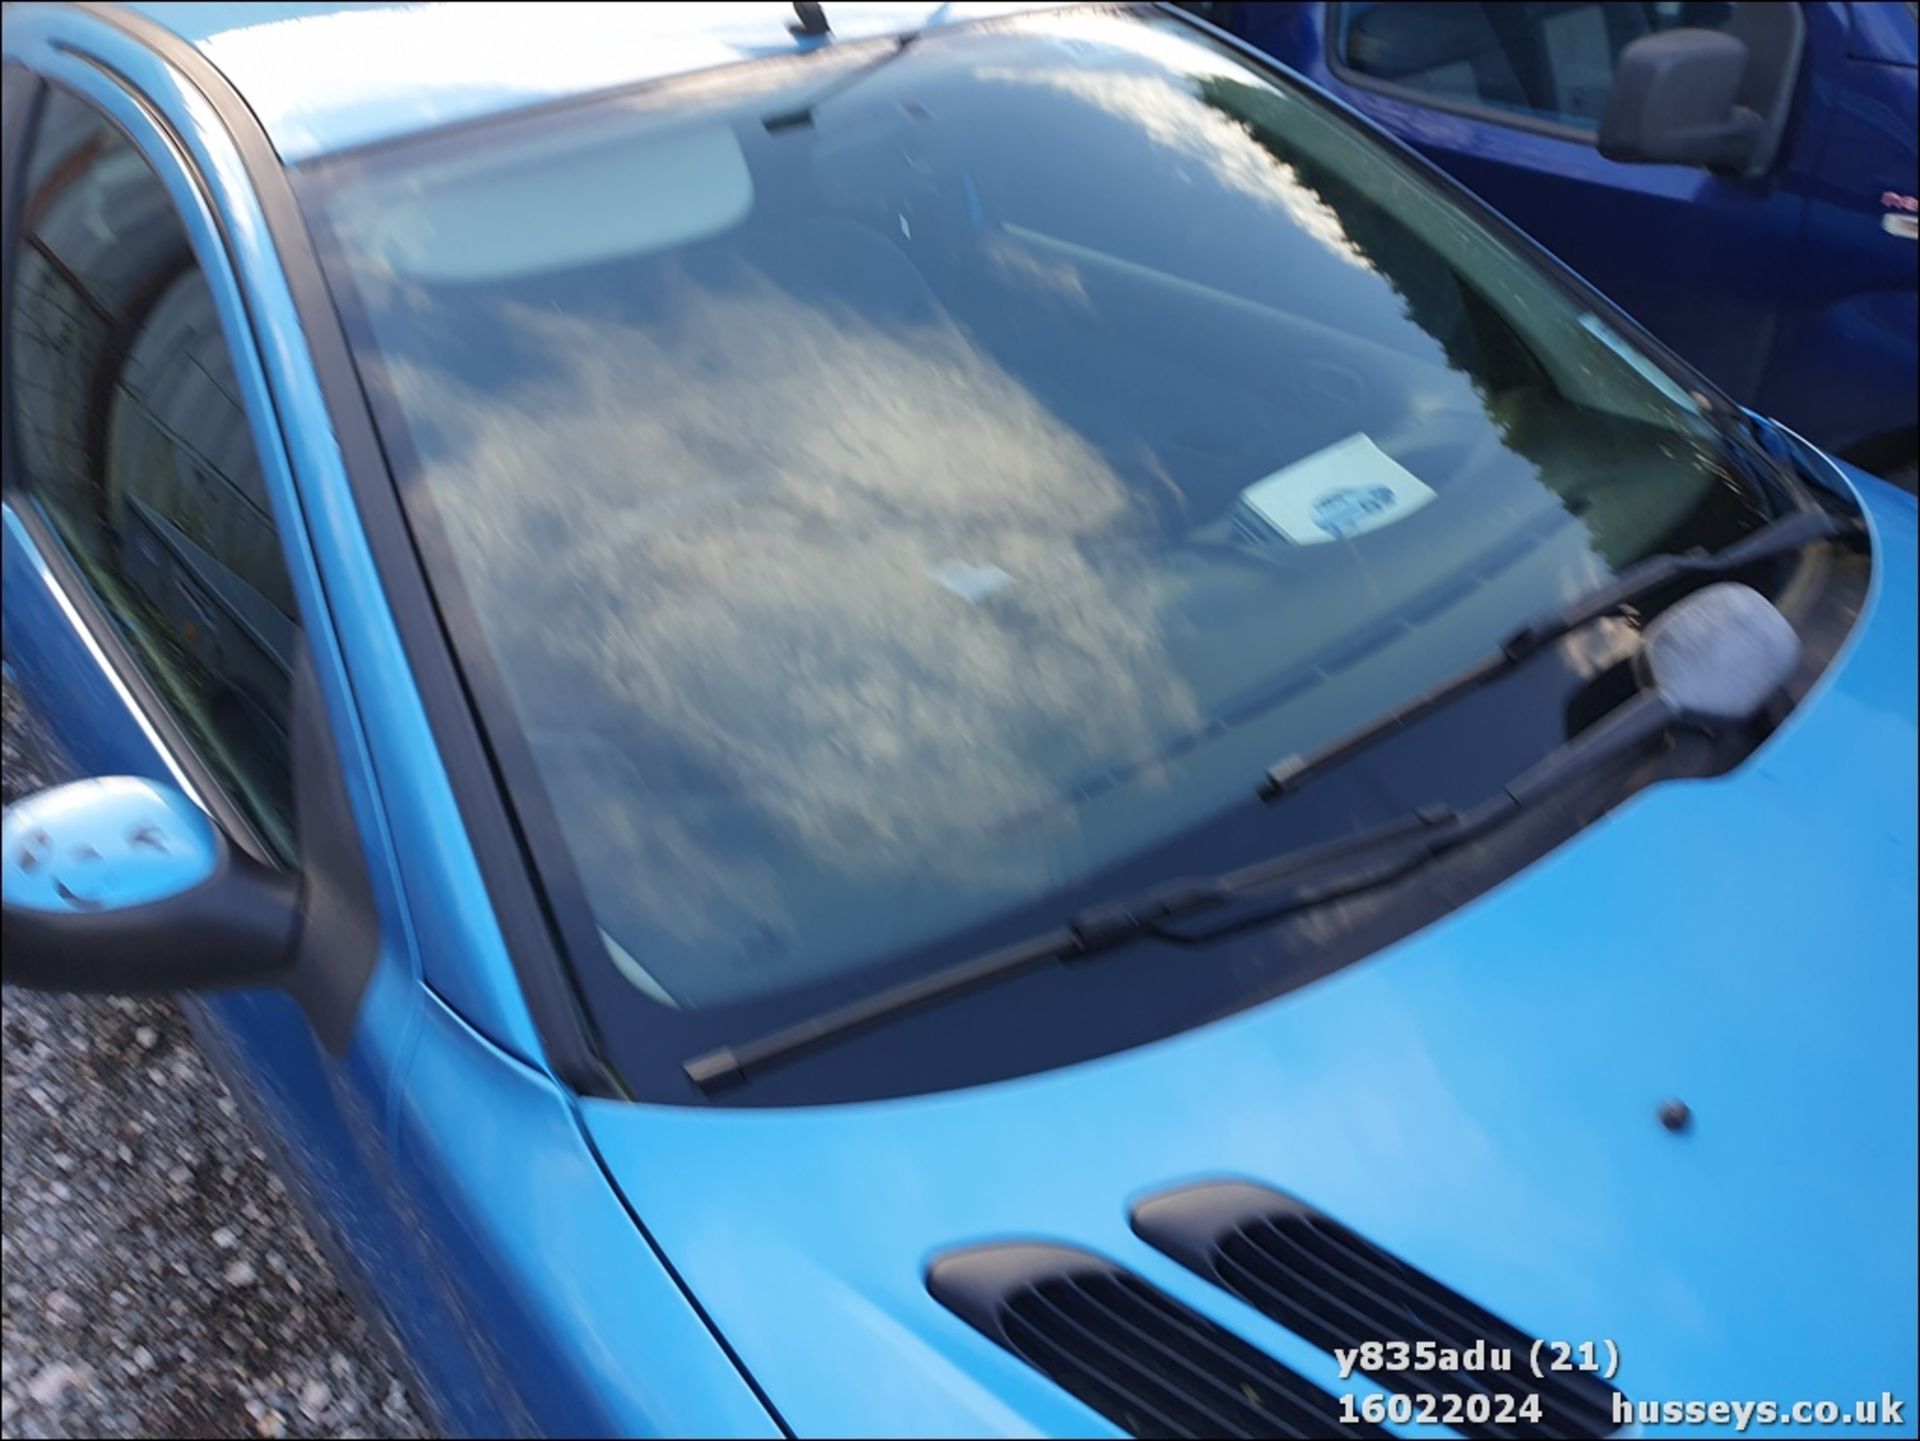 2001 PEUGEOT 206 LX AUTO - 1360cc 3dr Hatchback (Blue, 85k) - Image 22 of 22